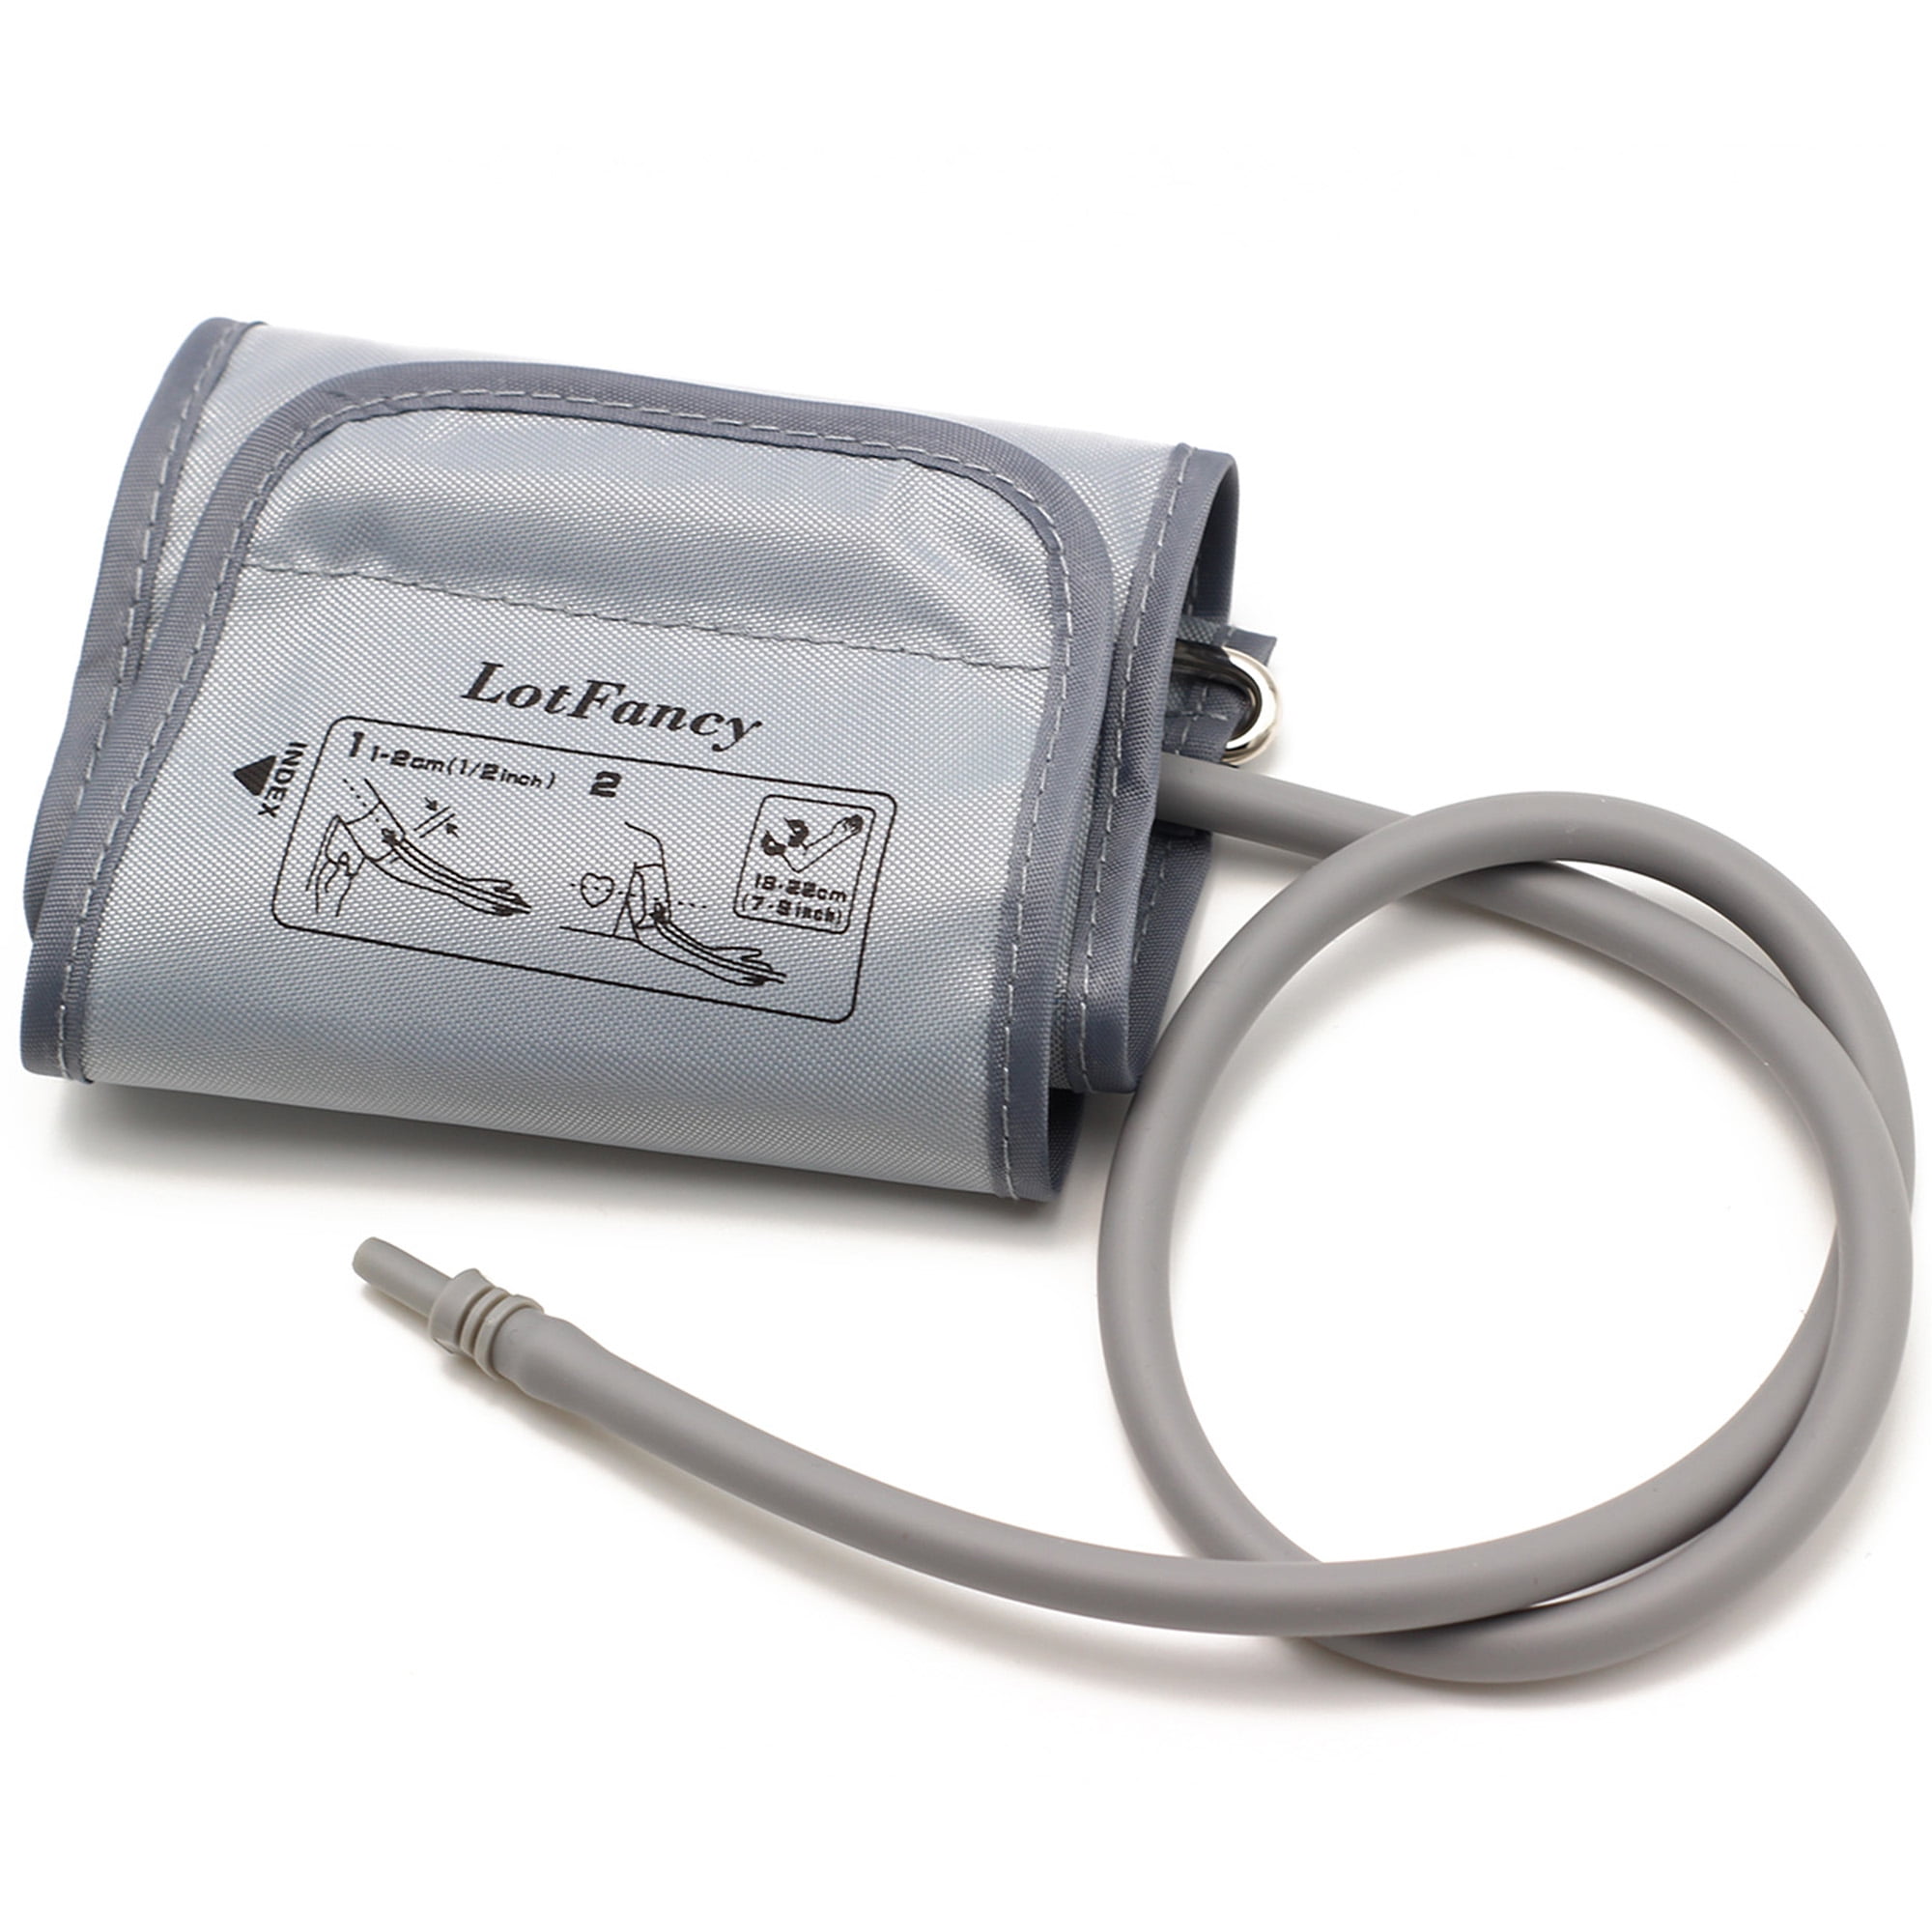 Omron BP7250 5 Series Wireless Upper Arm Blood Pressure Monitor &  HEM-CS24-B 7-Inch to 9-Inch Small D-Ring Cuff 